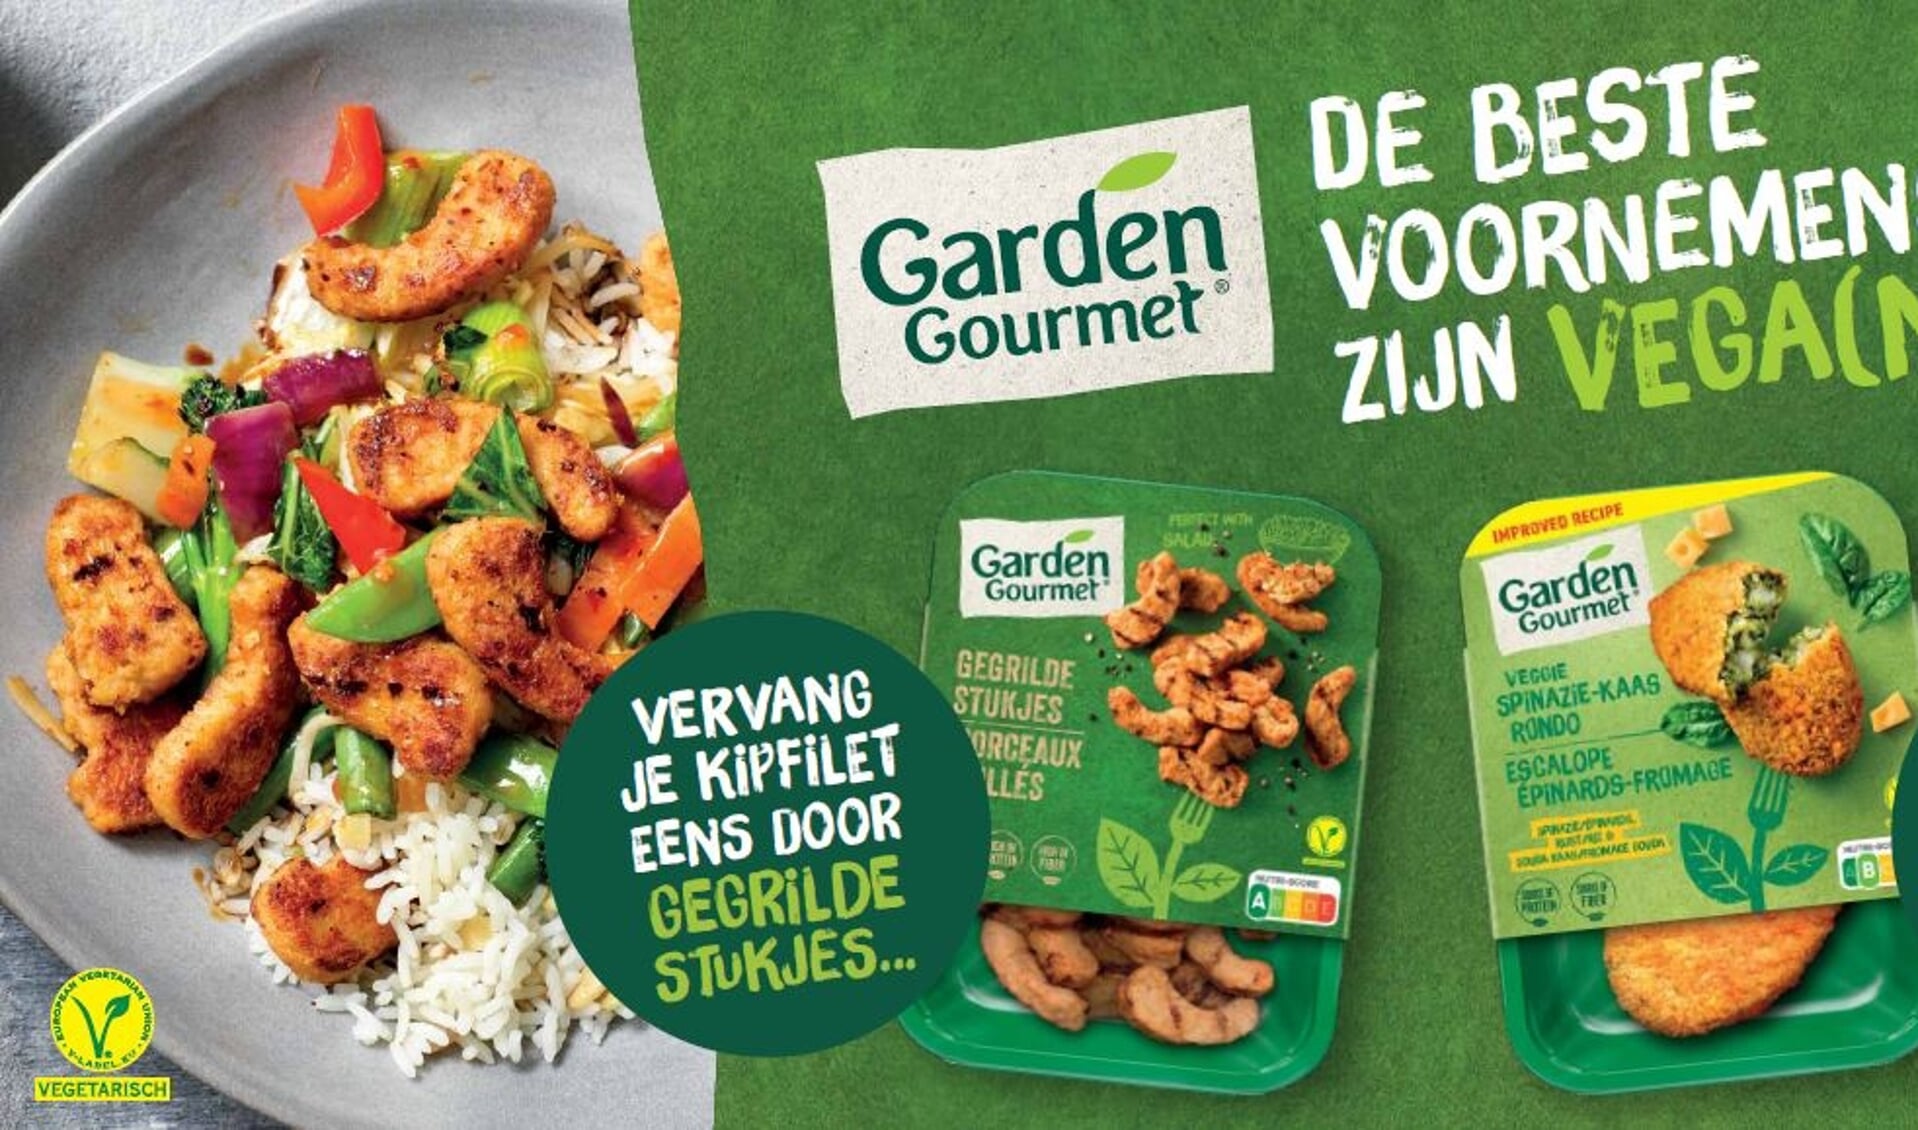 Nestlé Nederland wijst op eigen successen